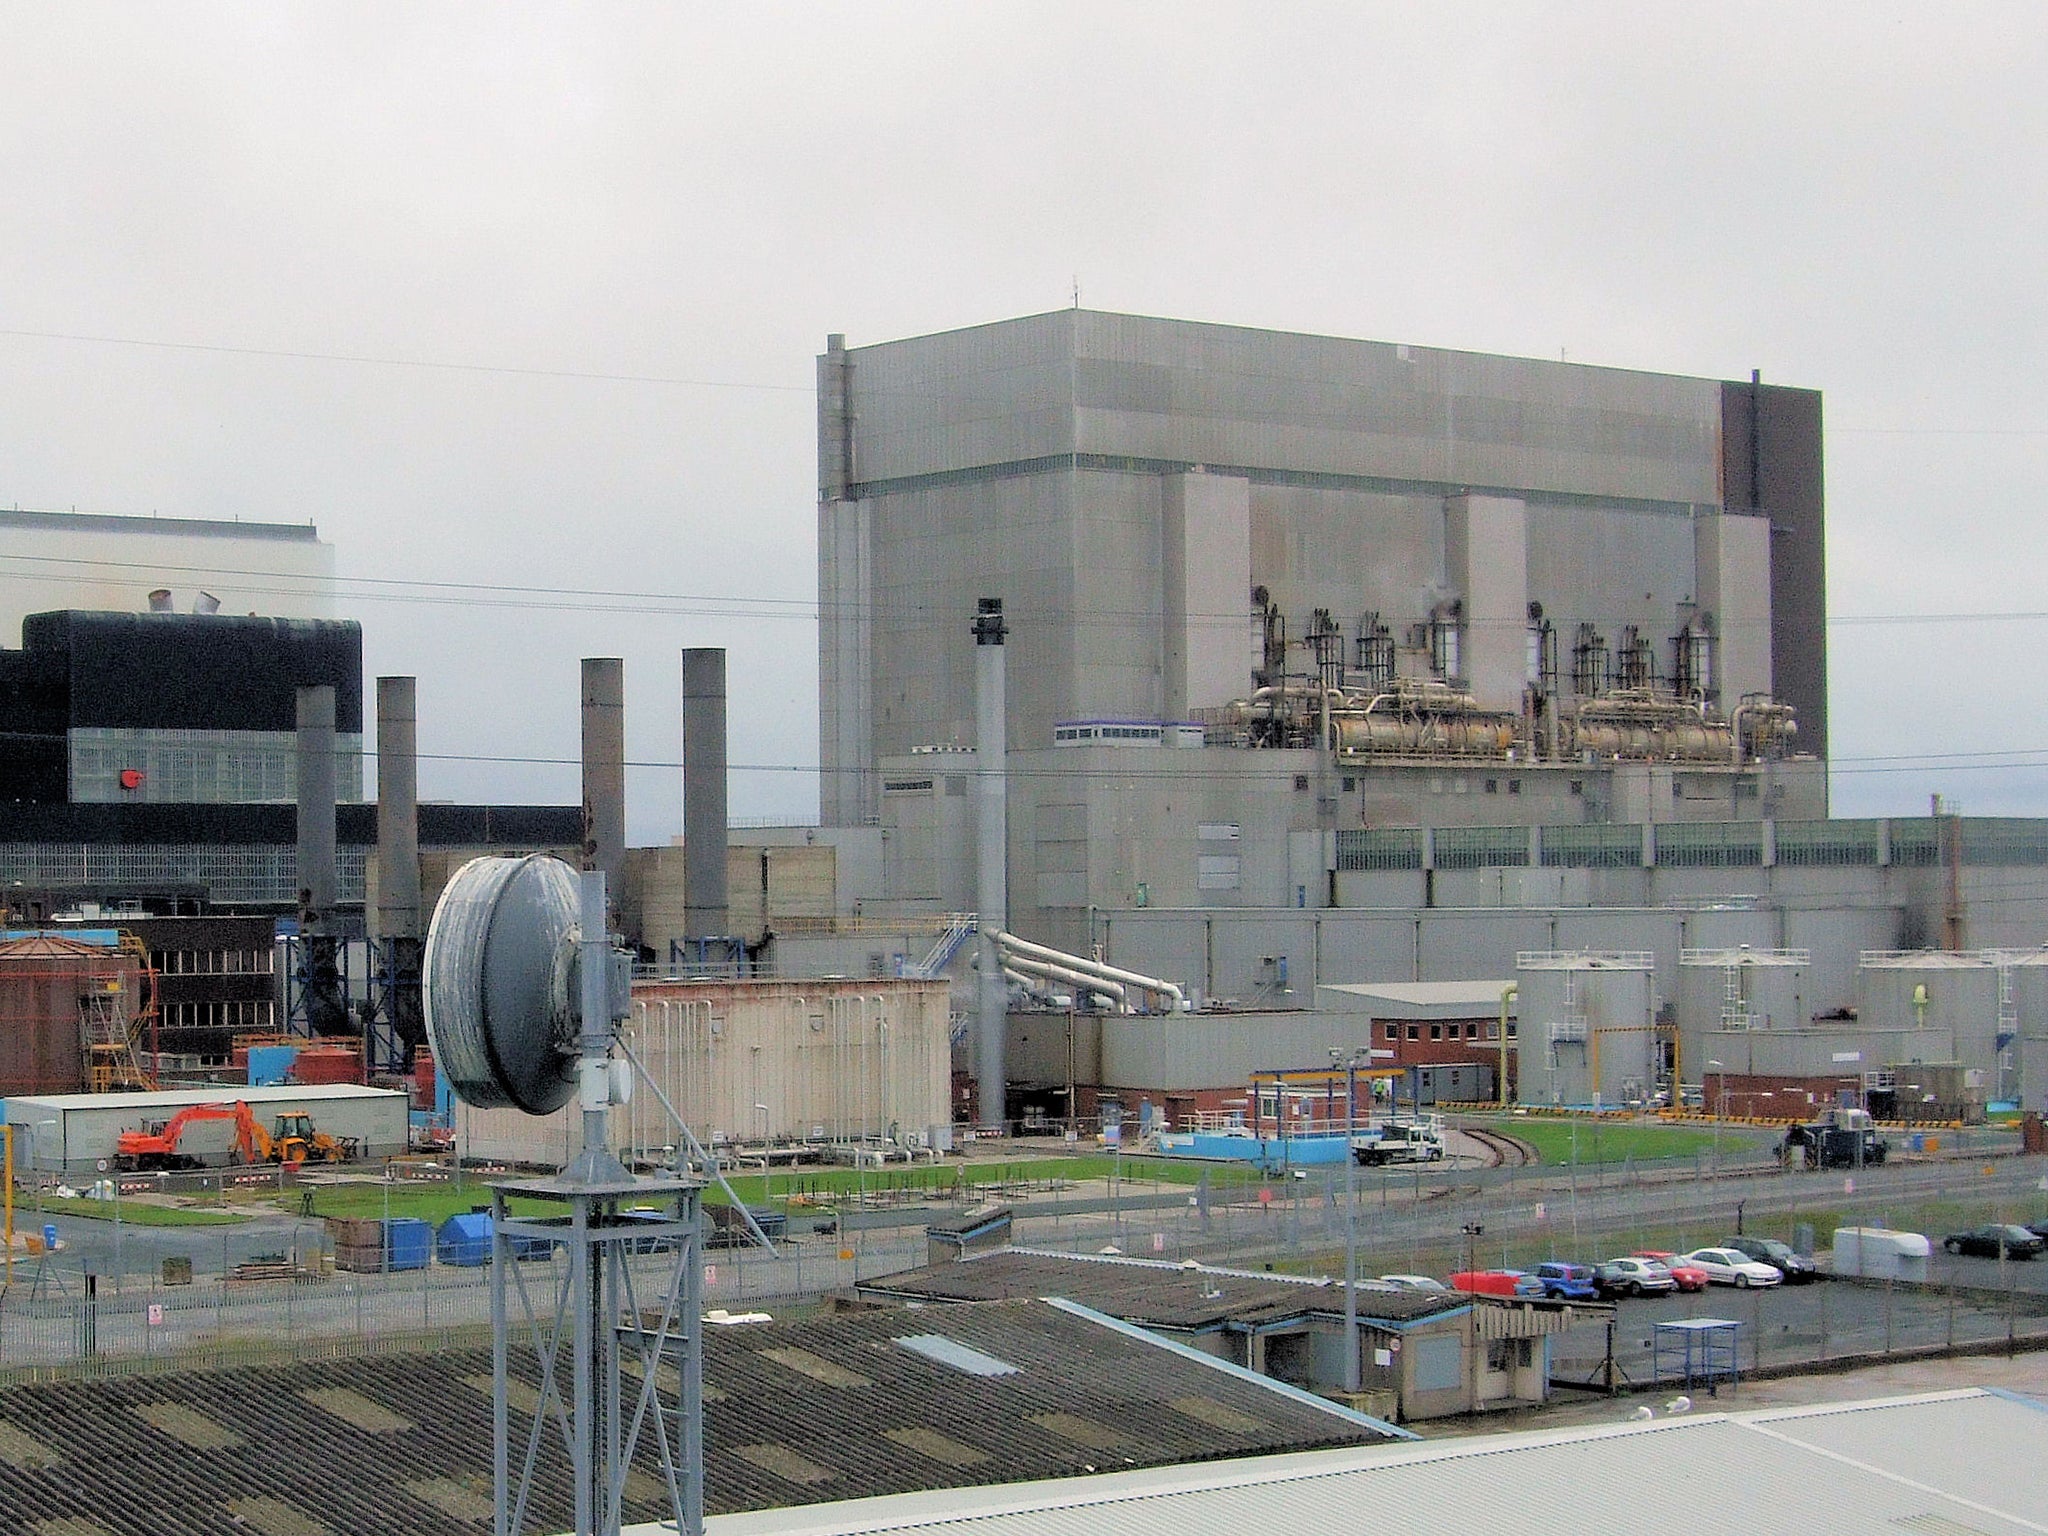 Heysham 1 nuclear power station